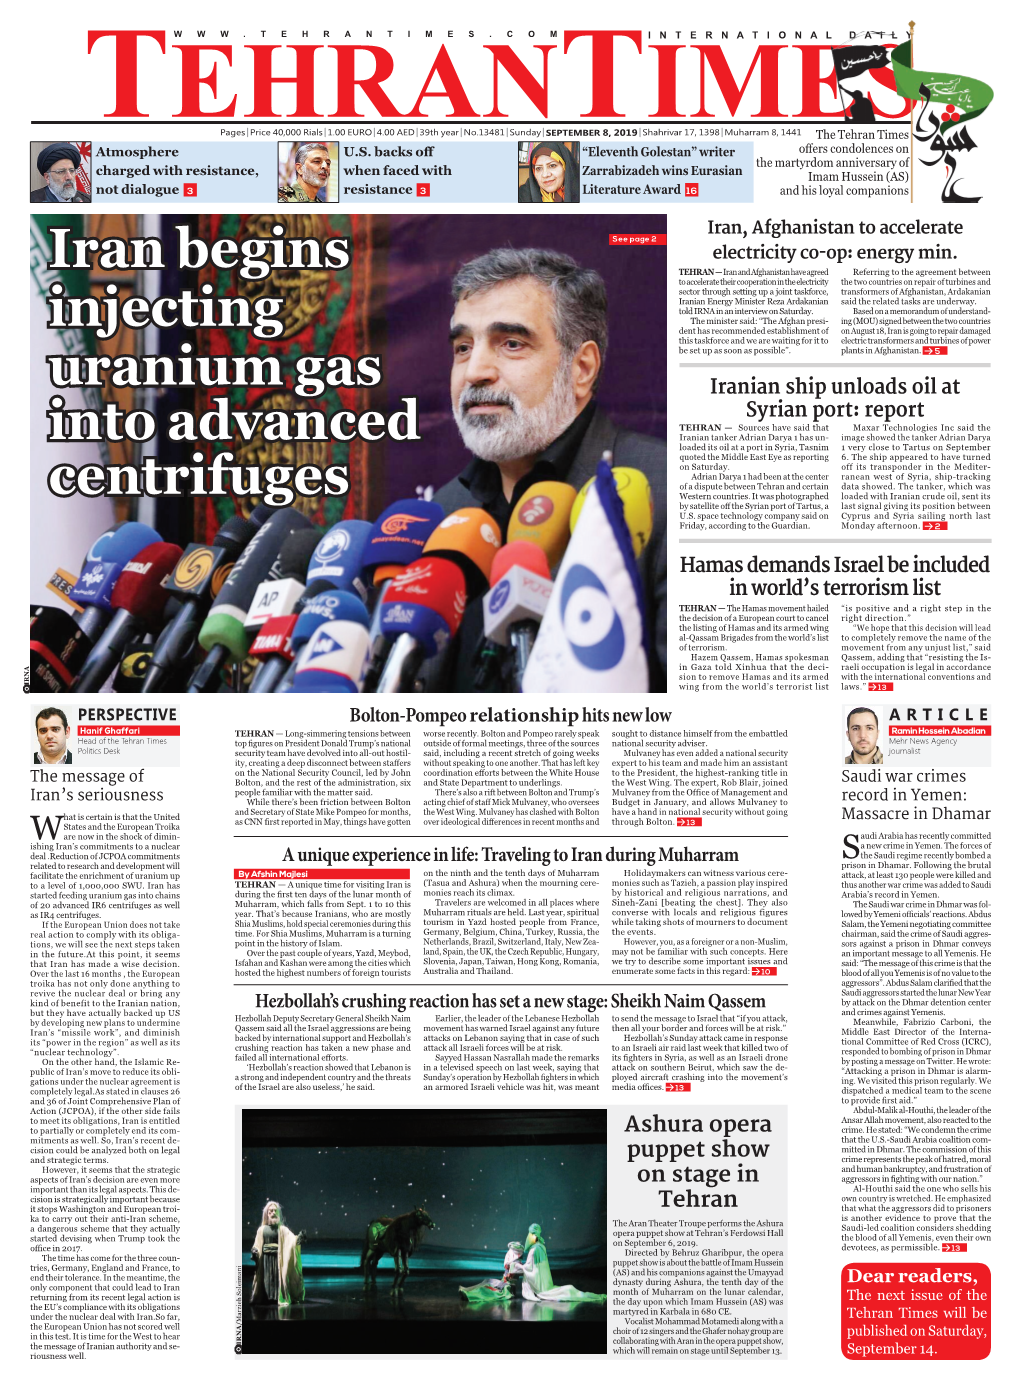 Iran Begins Injecting Uranium Gas Into Advanced Centrifuges